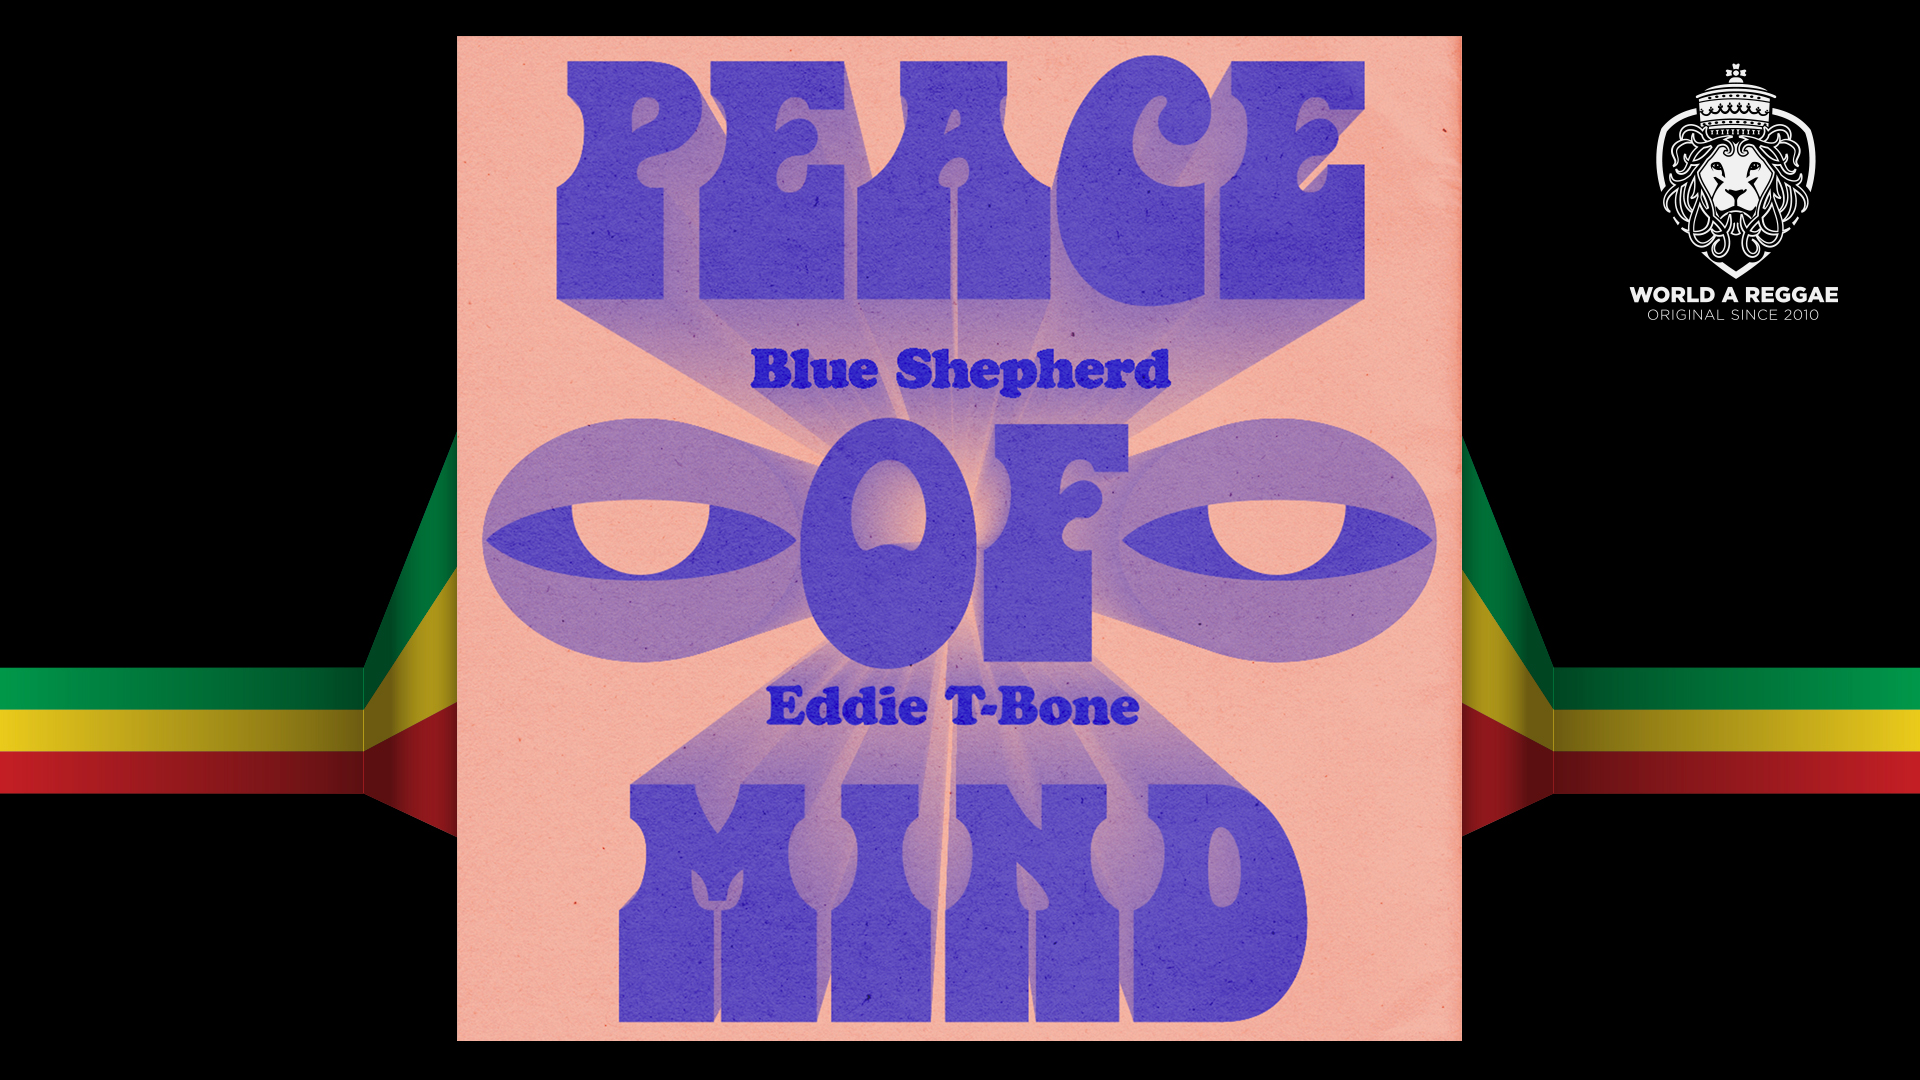 Piece of mind Blue Shepherd